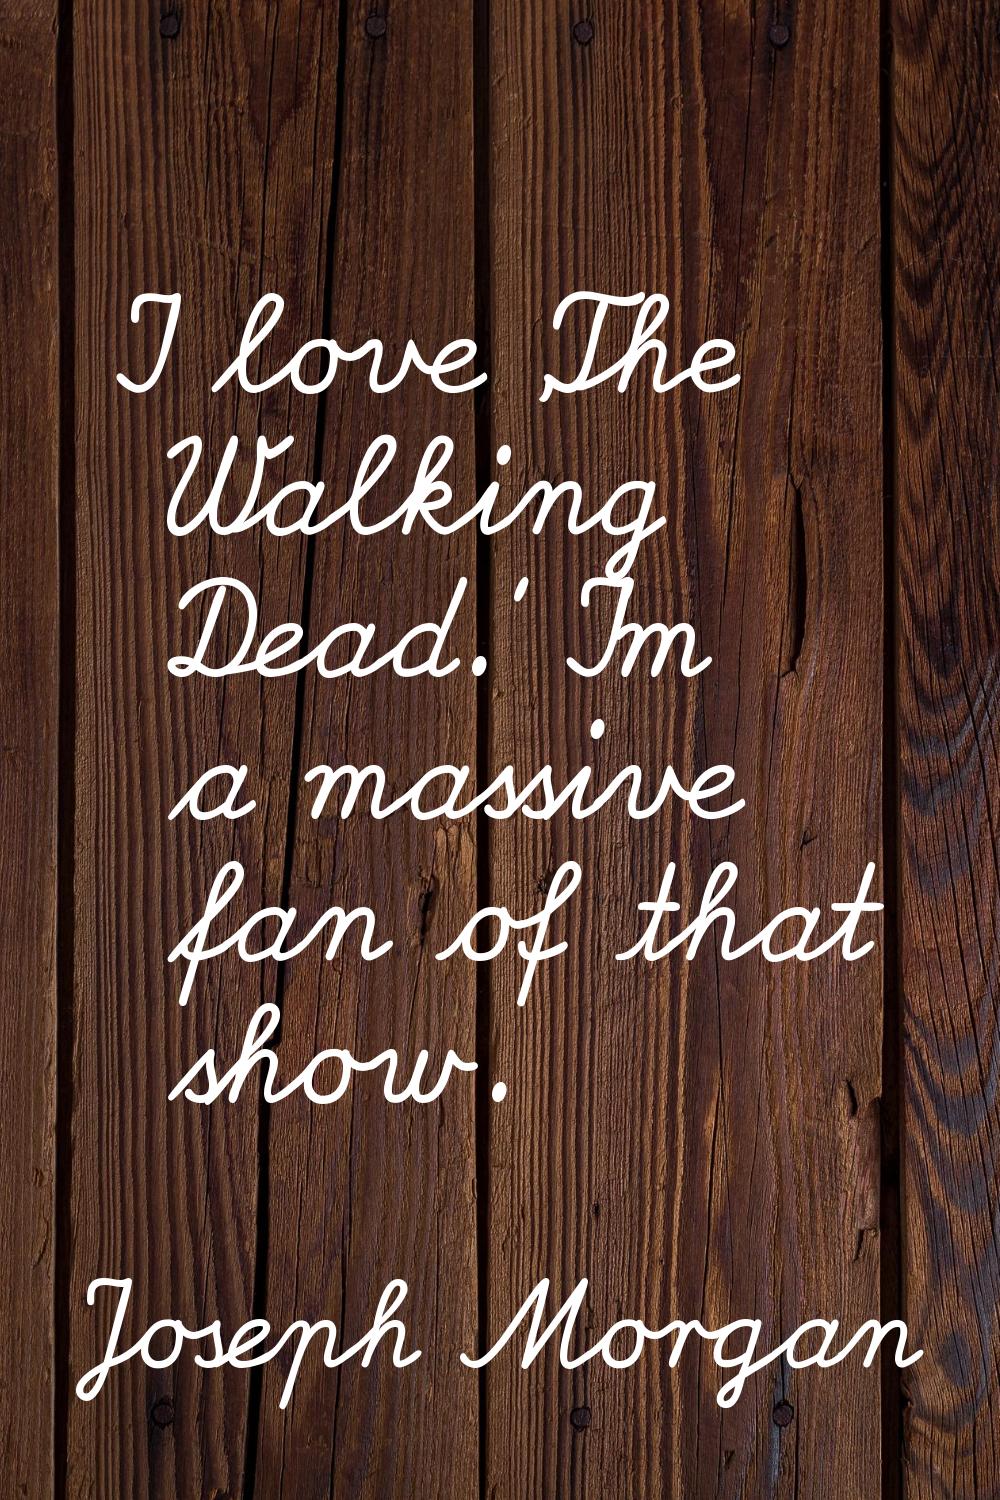 I love 'The Walking Dead.' I'm a massive fan of that show.